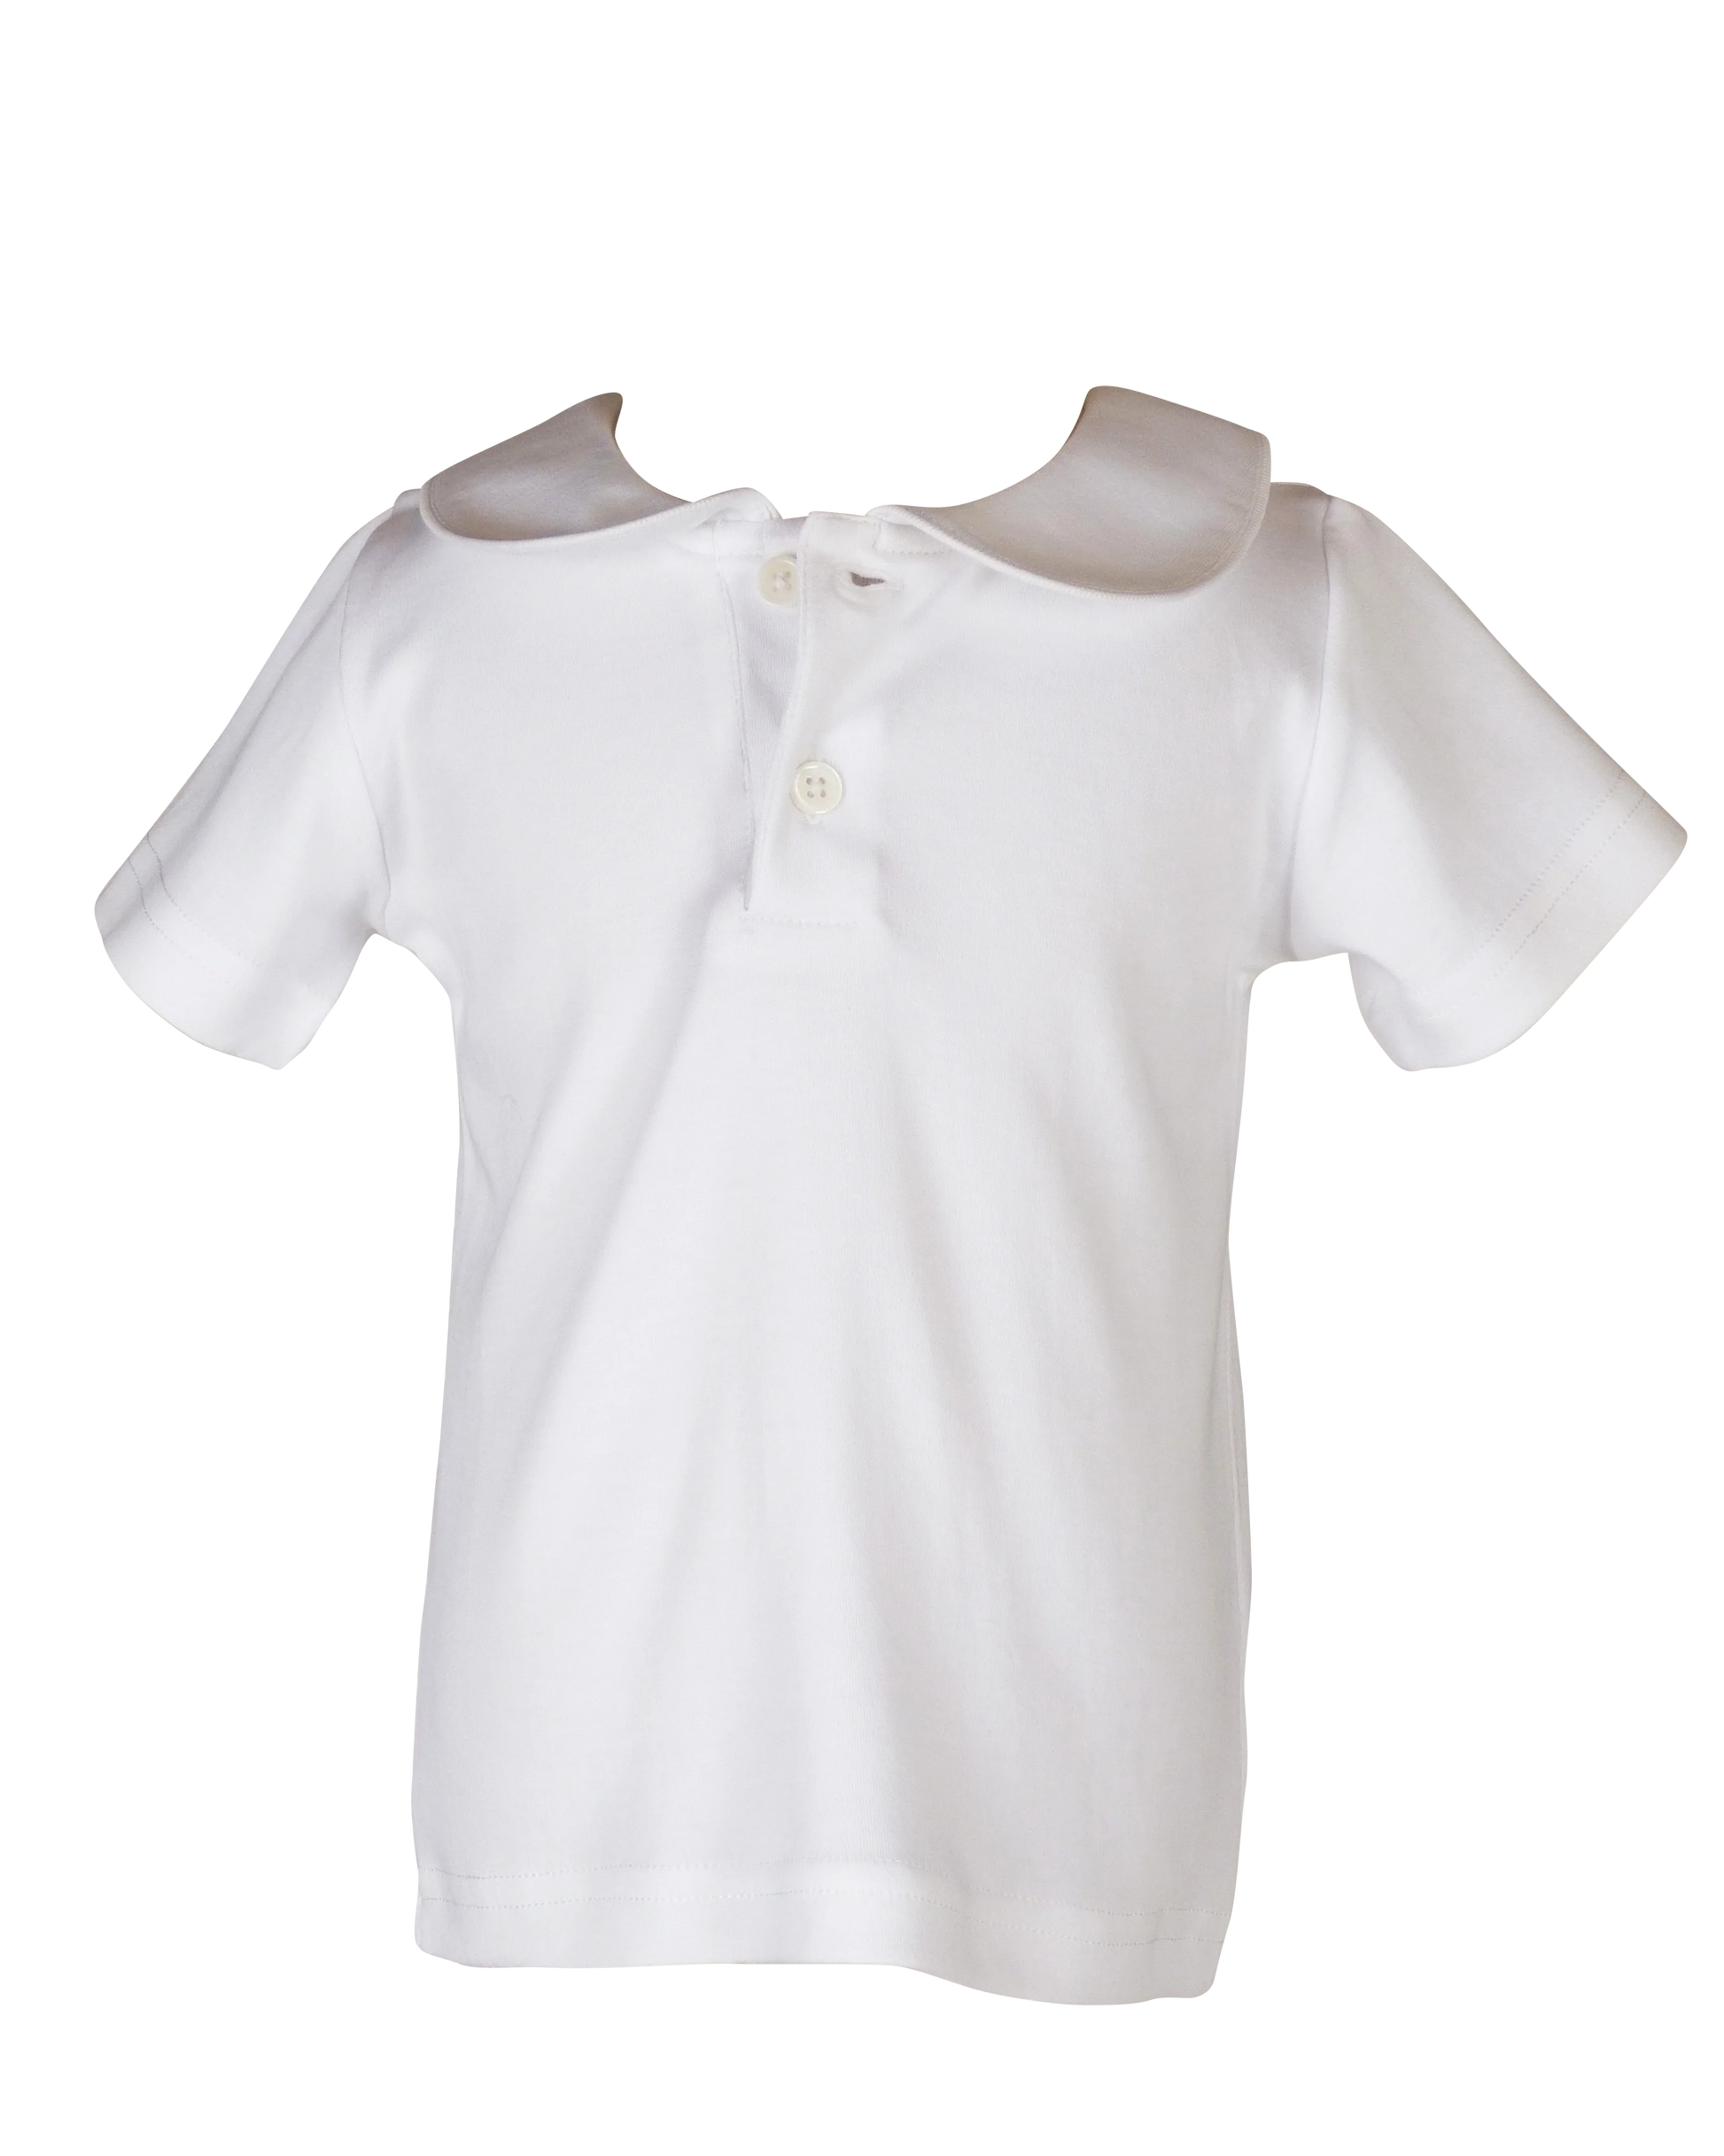 Peter Pan Collar Pima Cotton Shirt in White  - Doodlebug's Children's Boutique